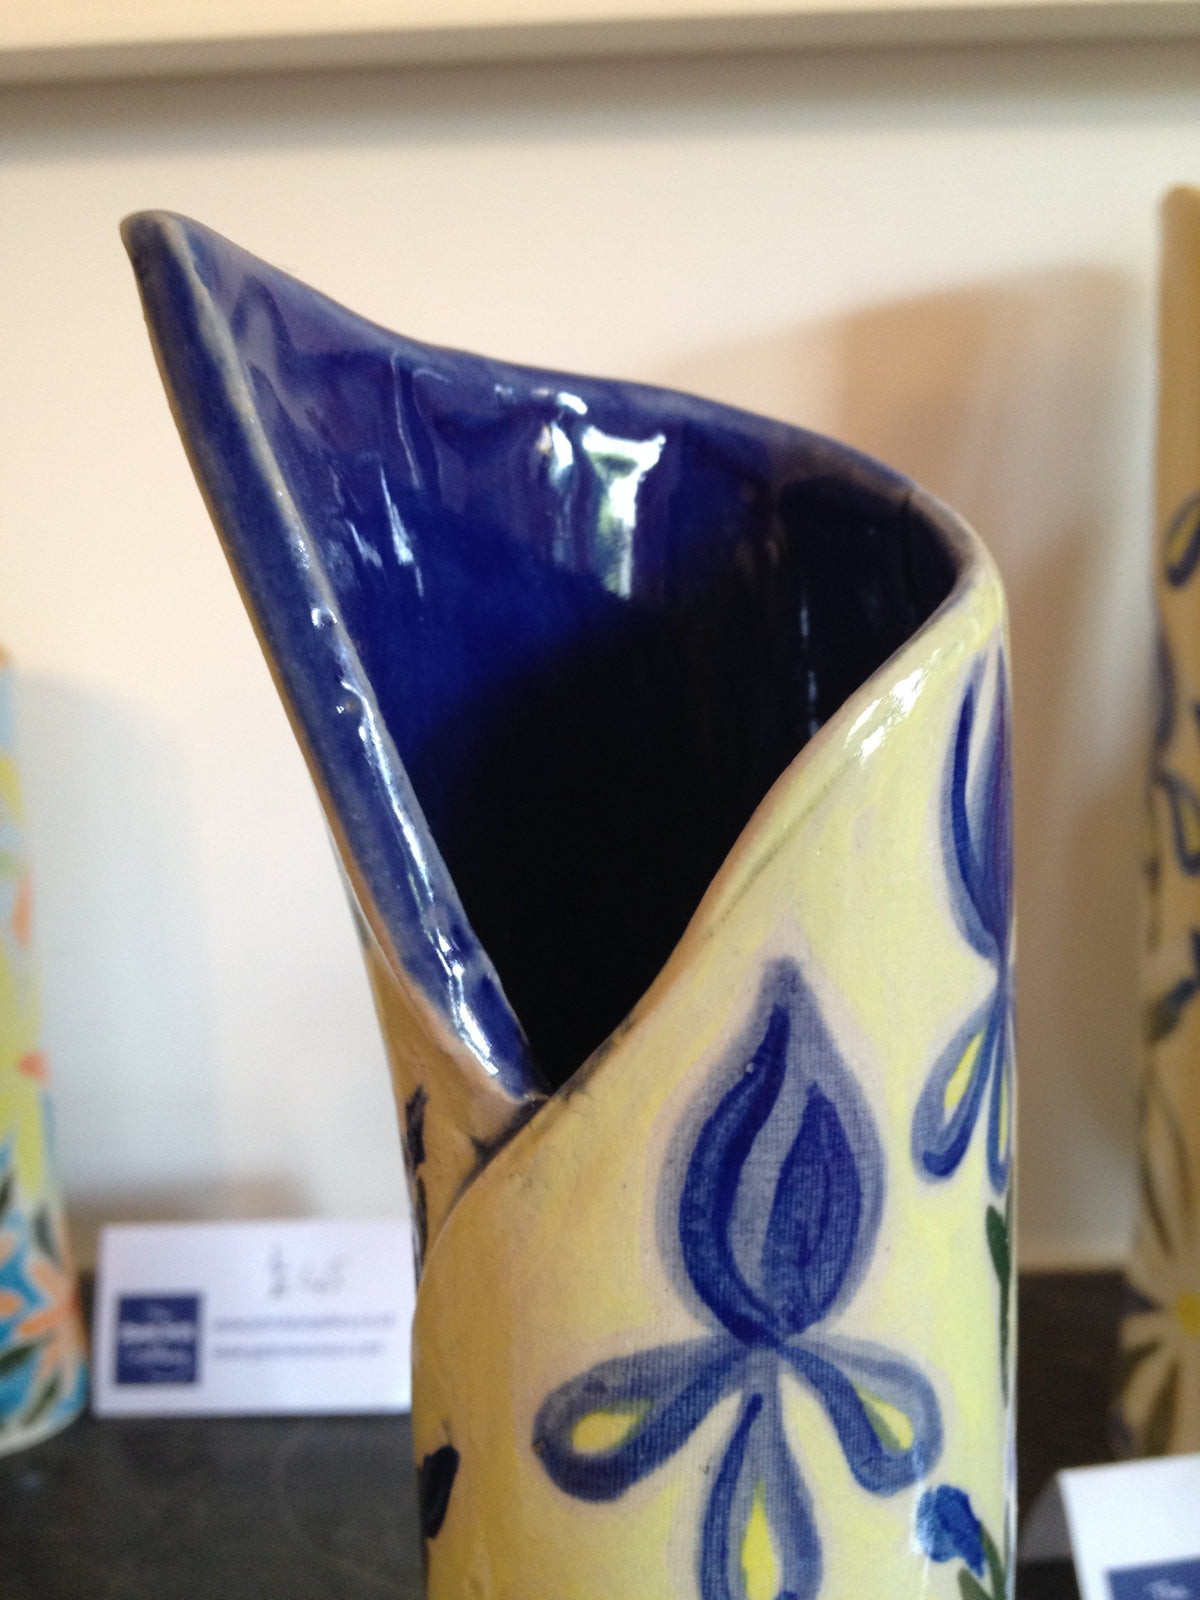 Cornish Ceramic Vase with Blue Iris by Joanne Short